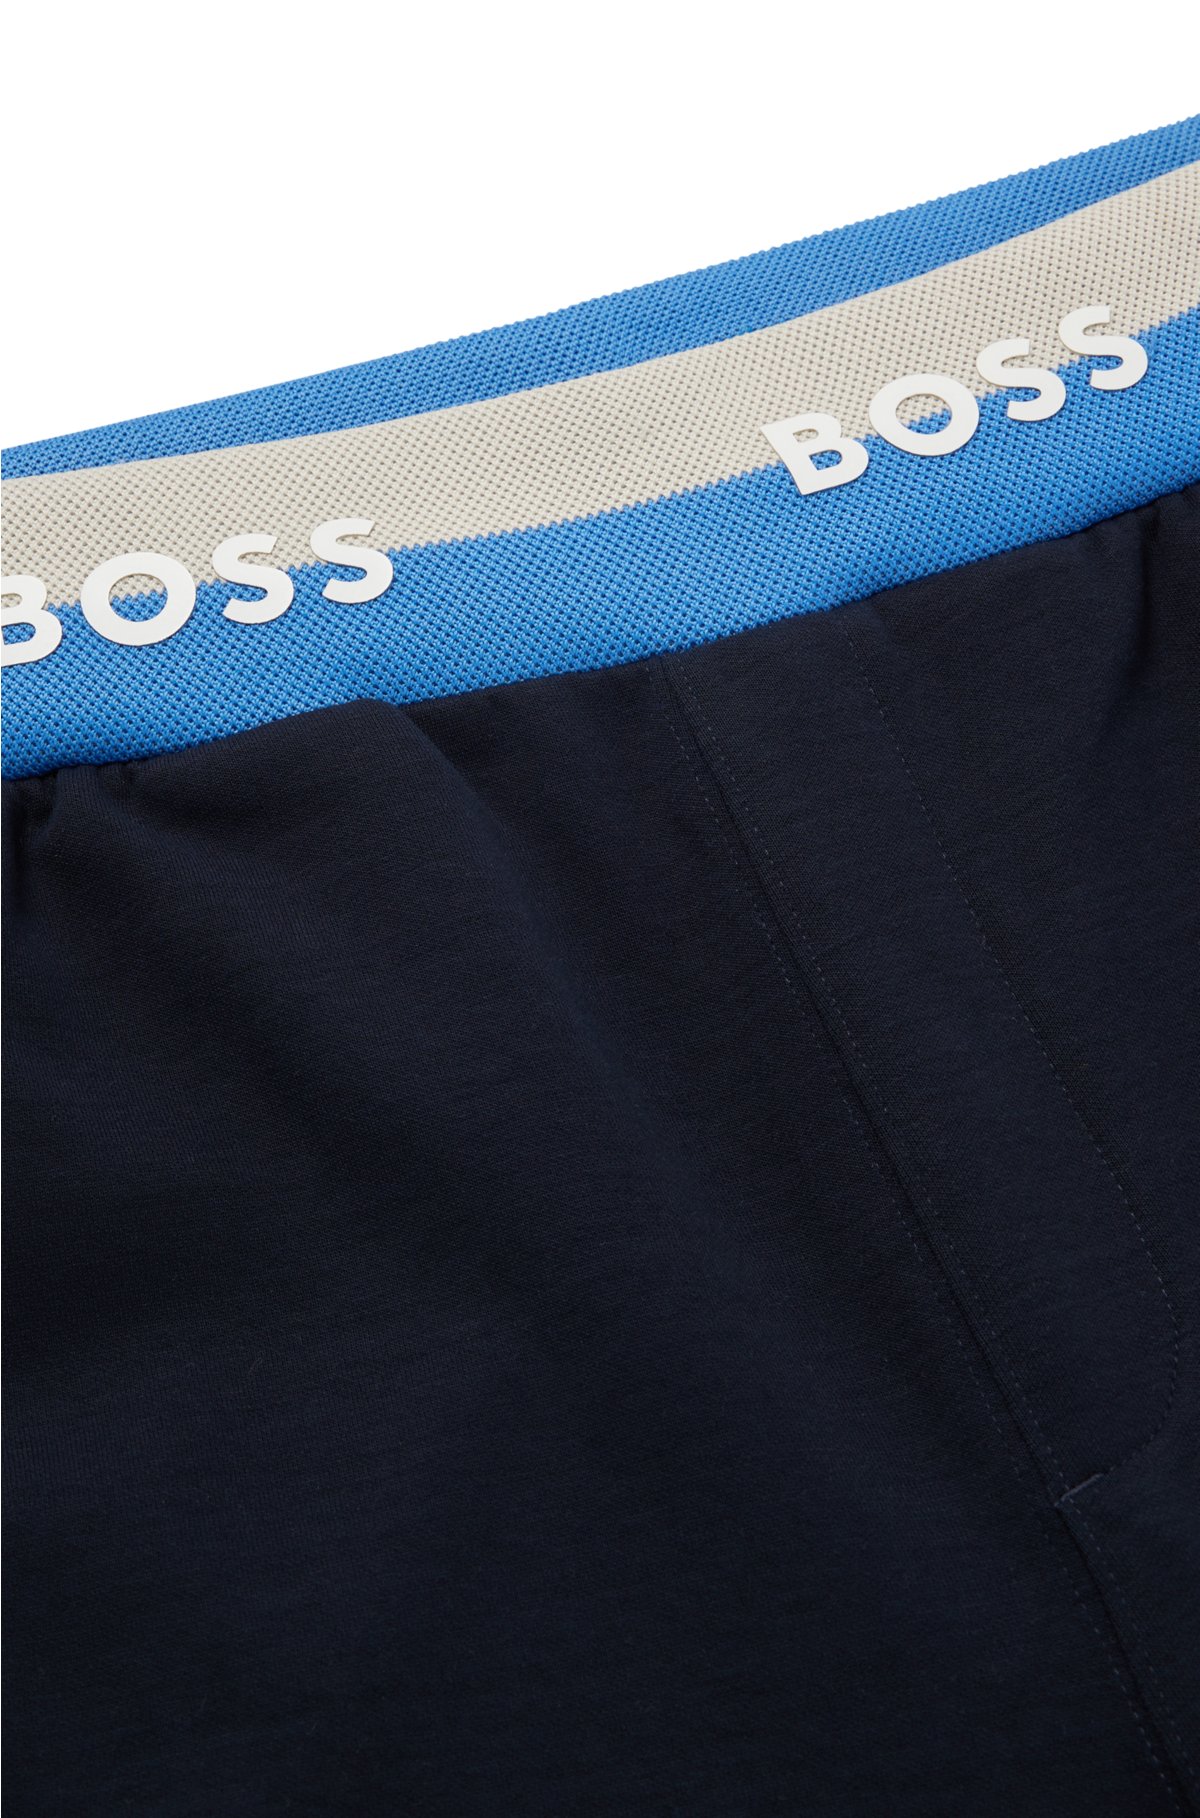 Hugo Boss Cotton-Blend Tracksuit Bottoms with Monogram Pattern- Black | Men's Jogging Pants Size XL